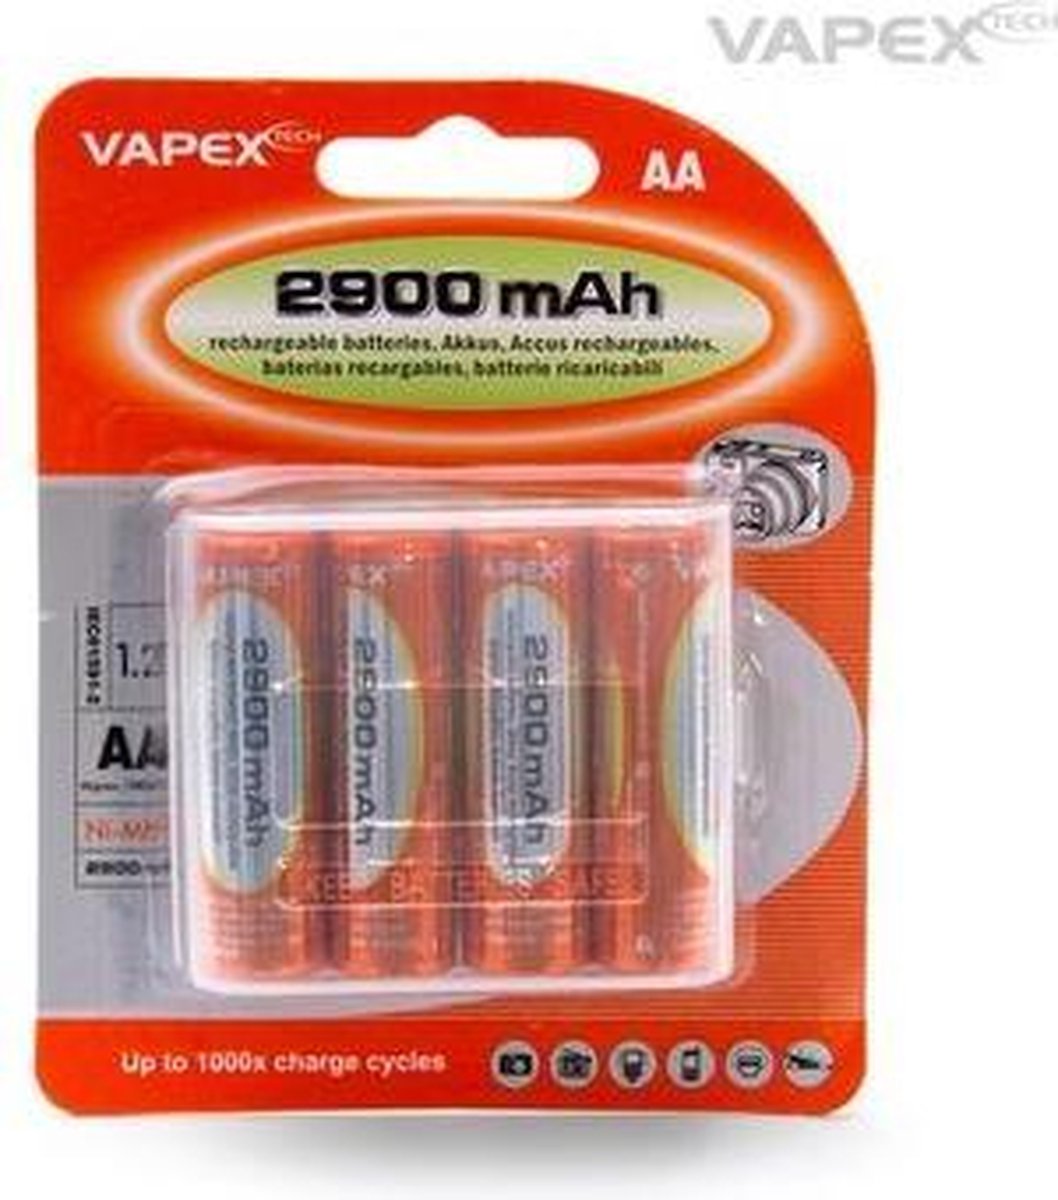 Vapex Oplaadbare AA Batterijen - 2900 mAh - 4 stuks - VAPEX